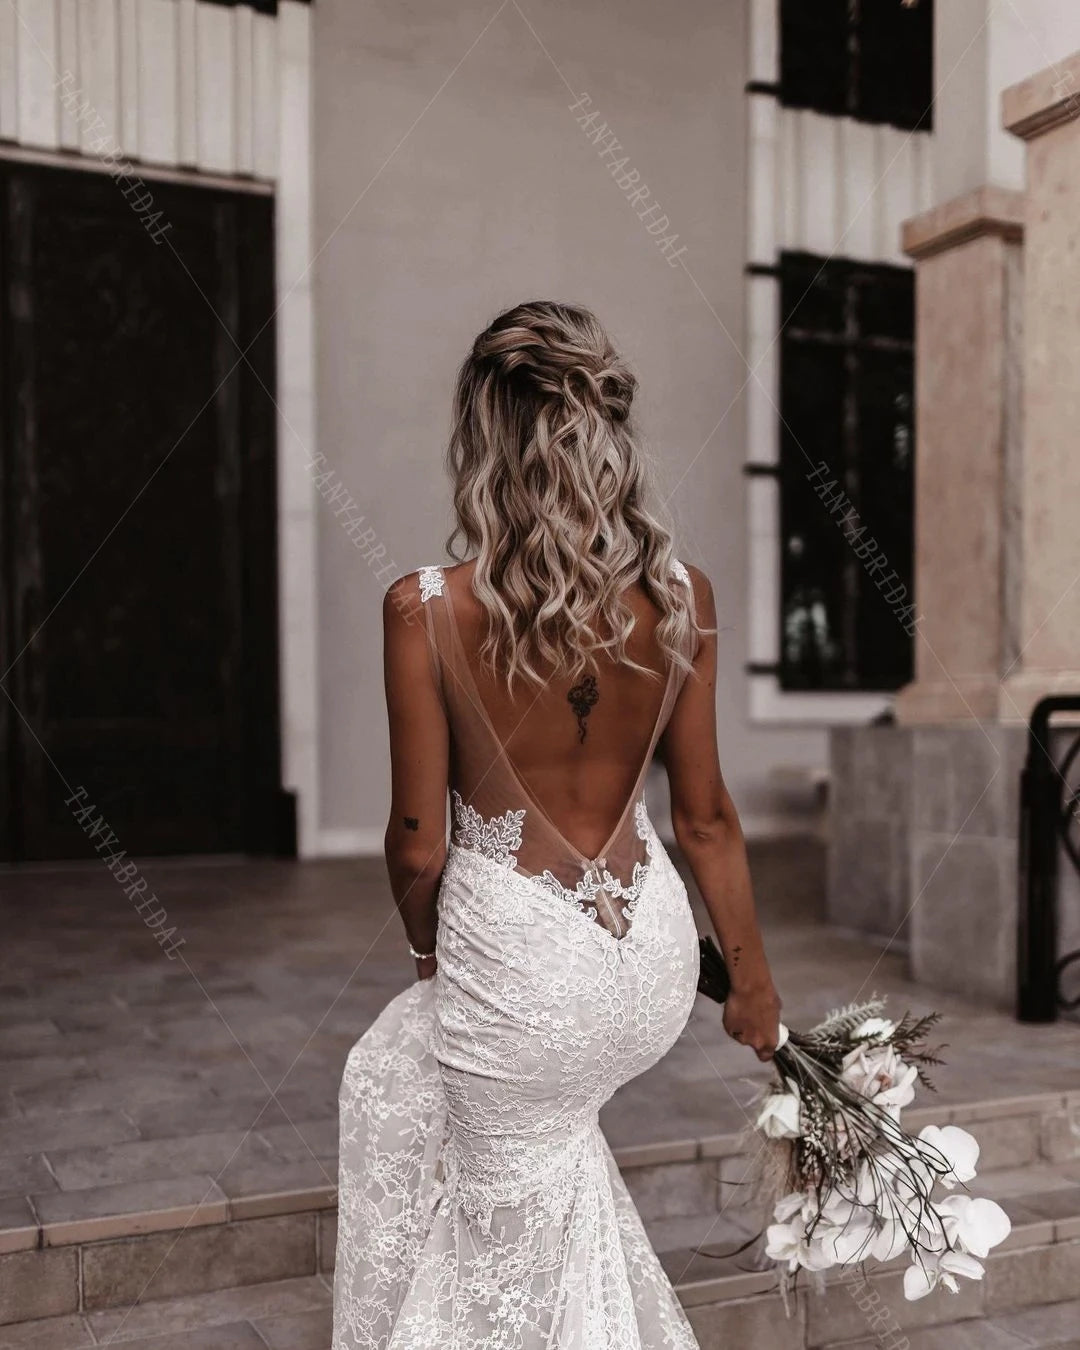 Romantic Lace Wedding Dresses Mermaid Backless Charming Noivas DW570 